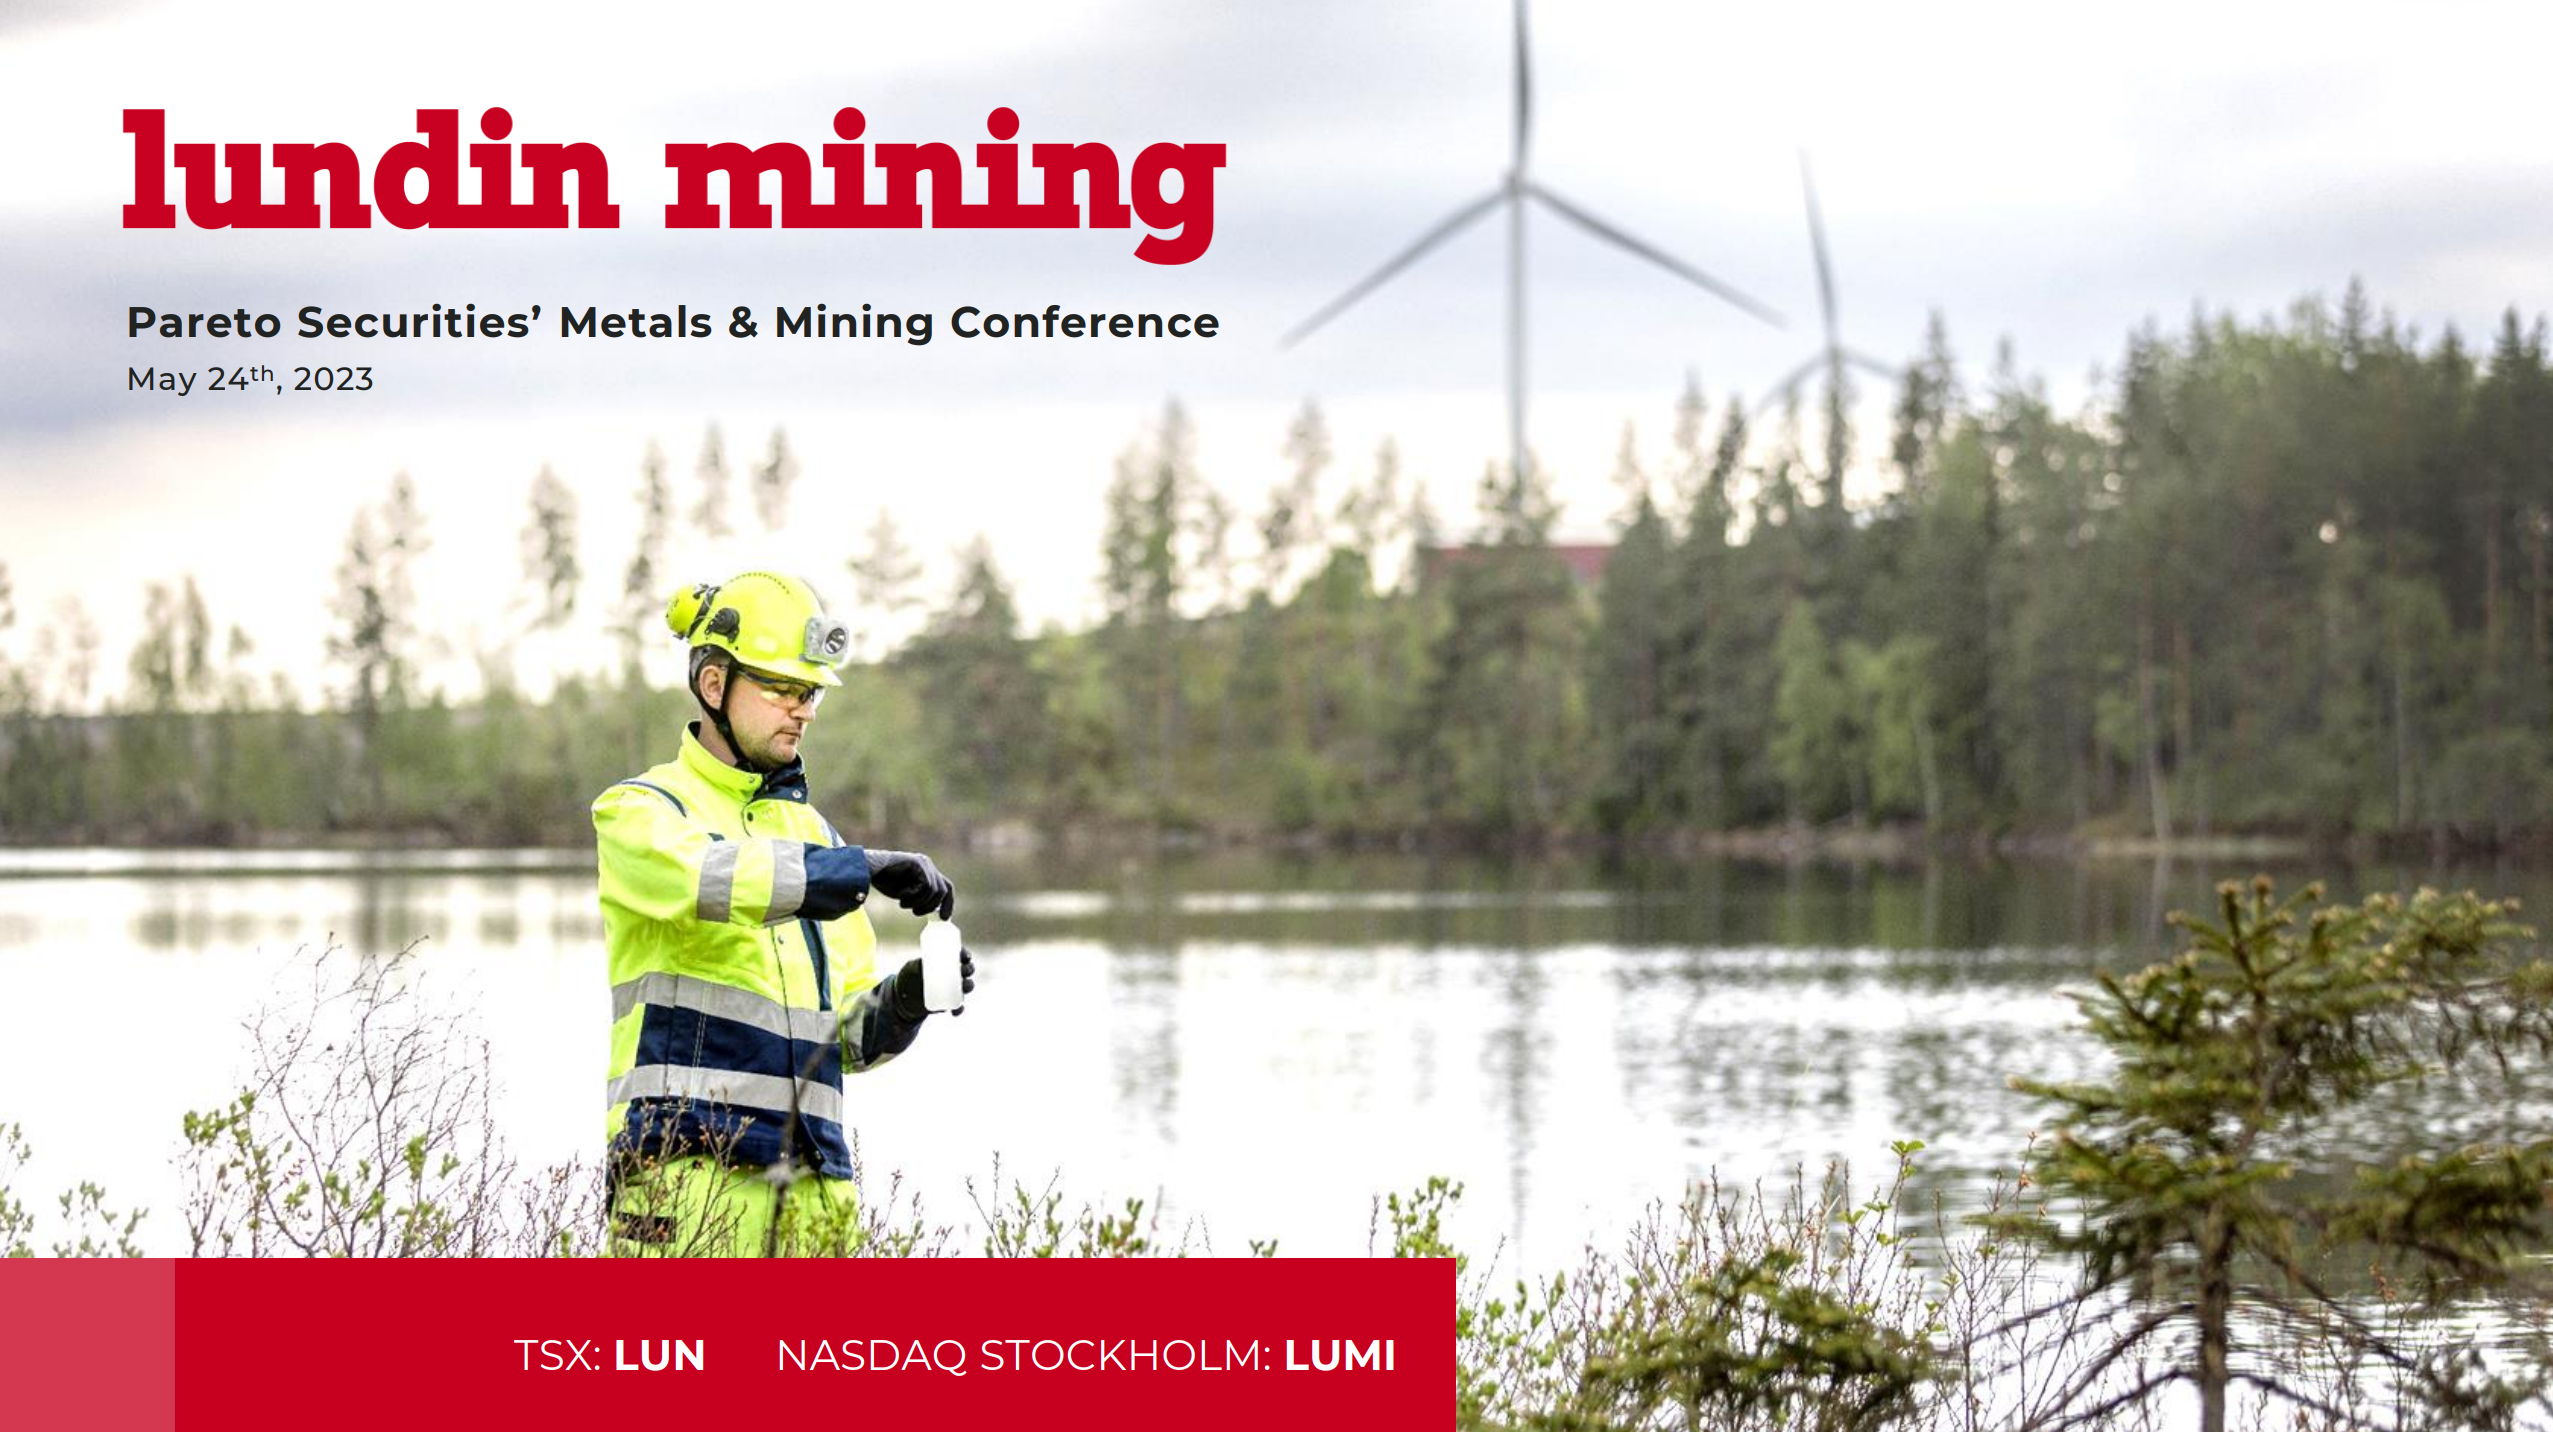 Pareto Securities' Metals & Mining Conference 2023